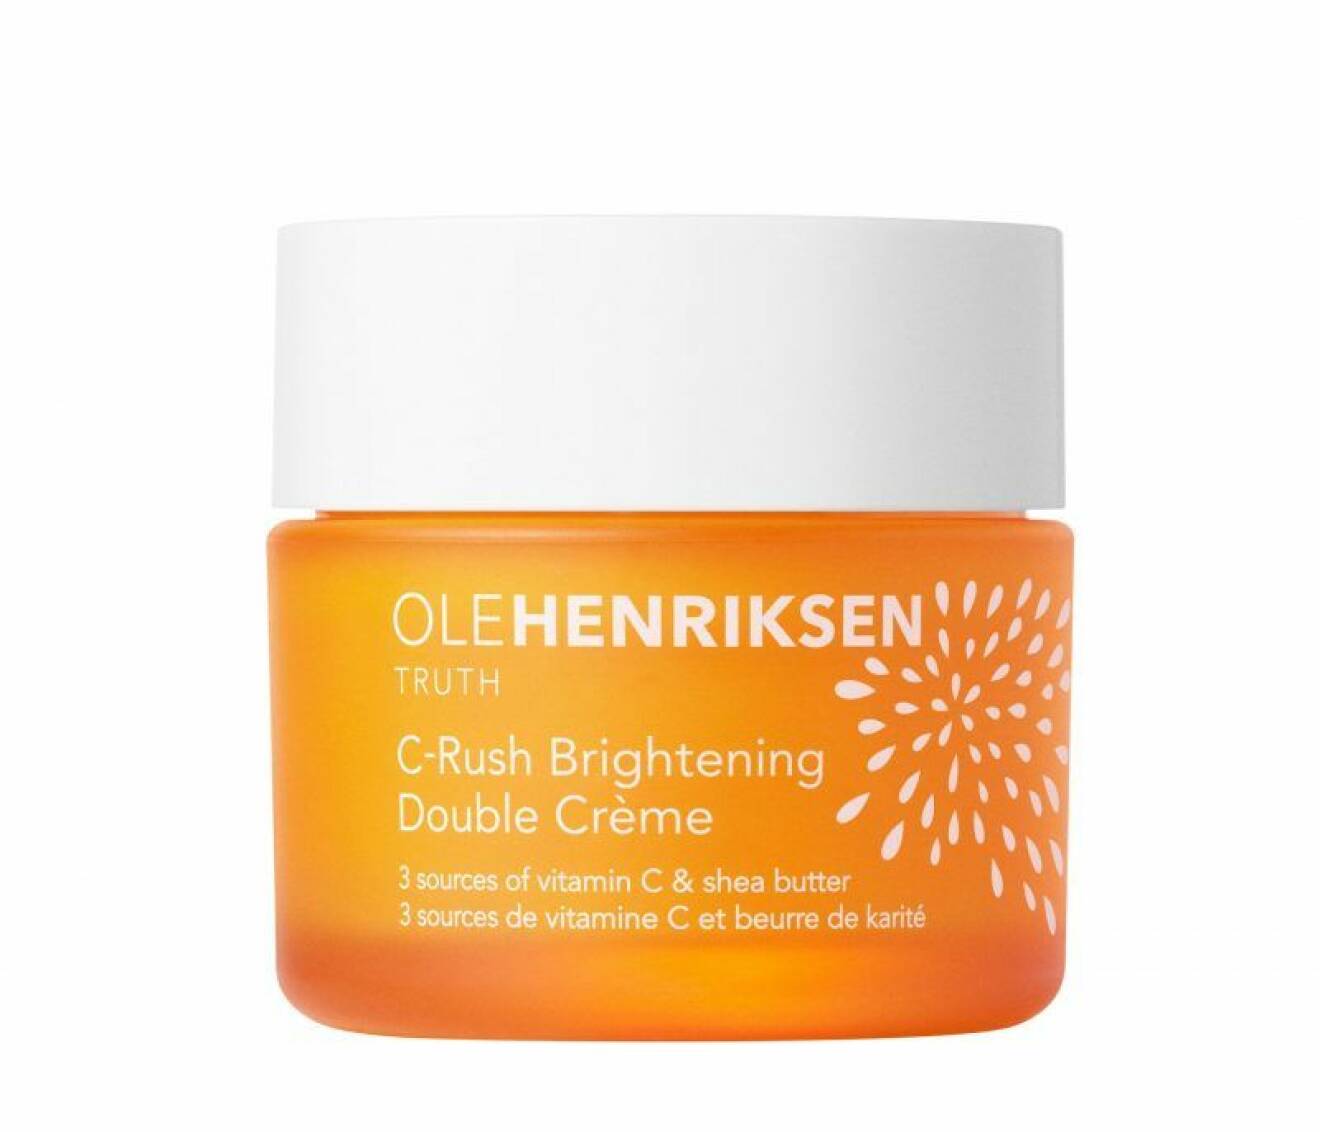 C-rush brightening double crème från Ole Henriksen